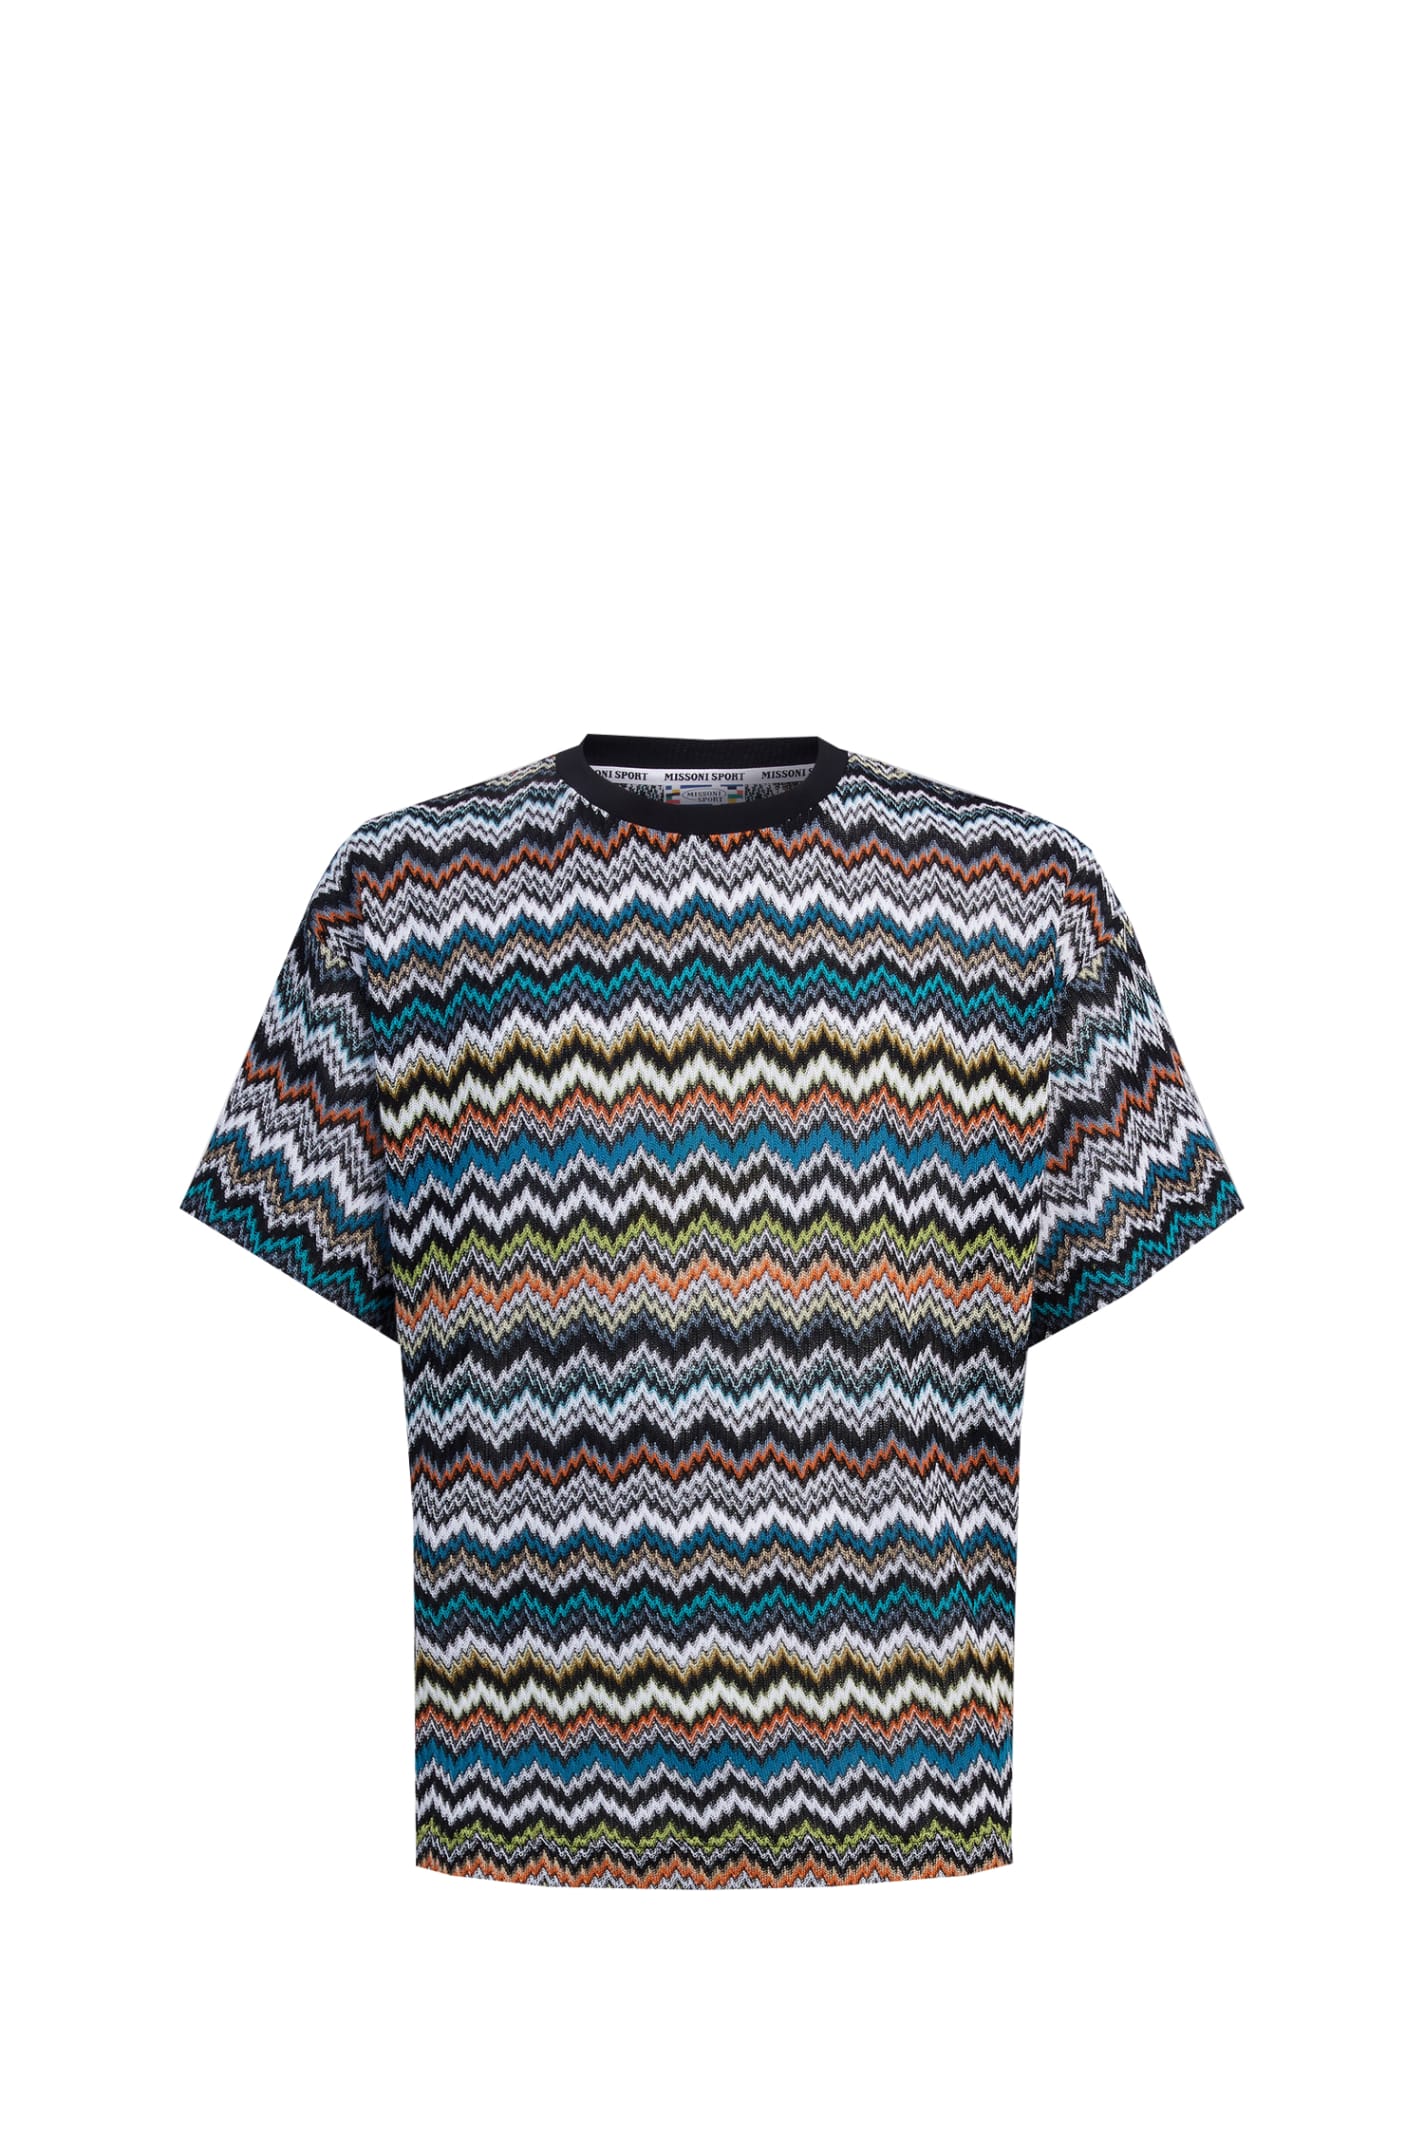 Missoni T-shirt In Multicolour